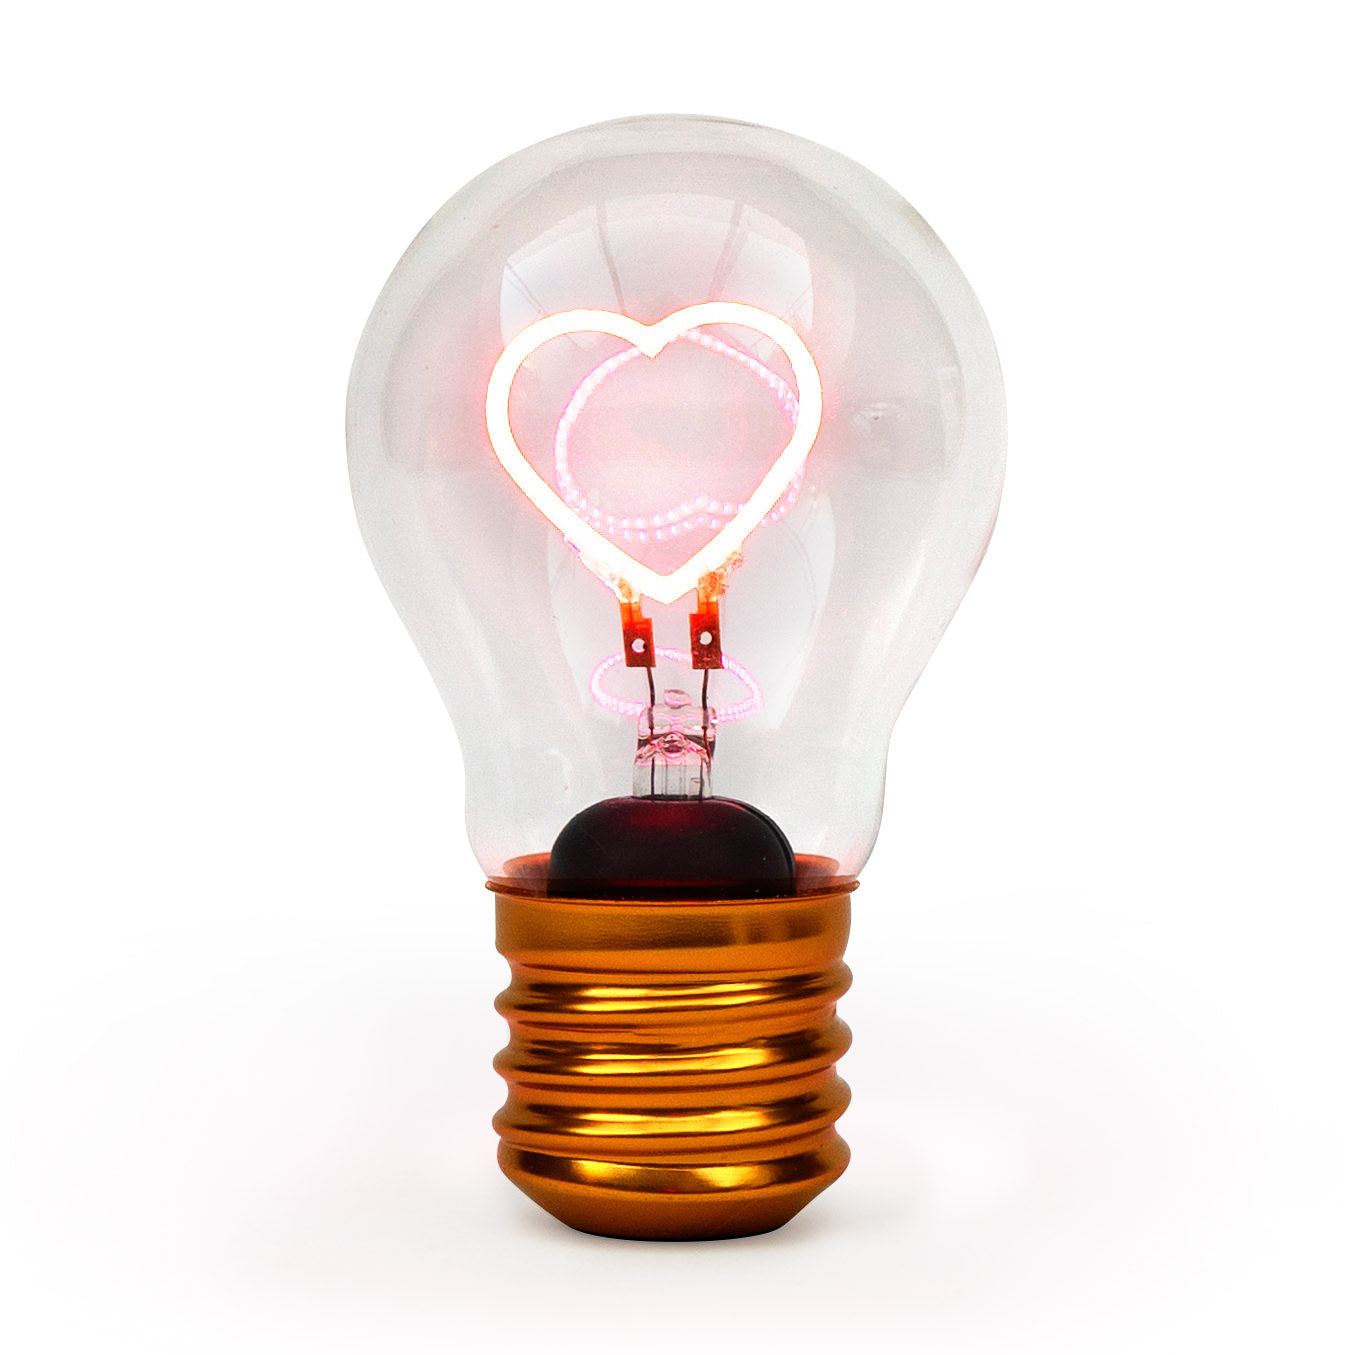 Wholesale Cartoon Style Light Bulb with Heart Enamel Pins